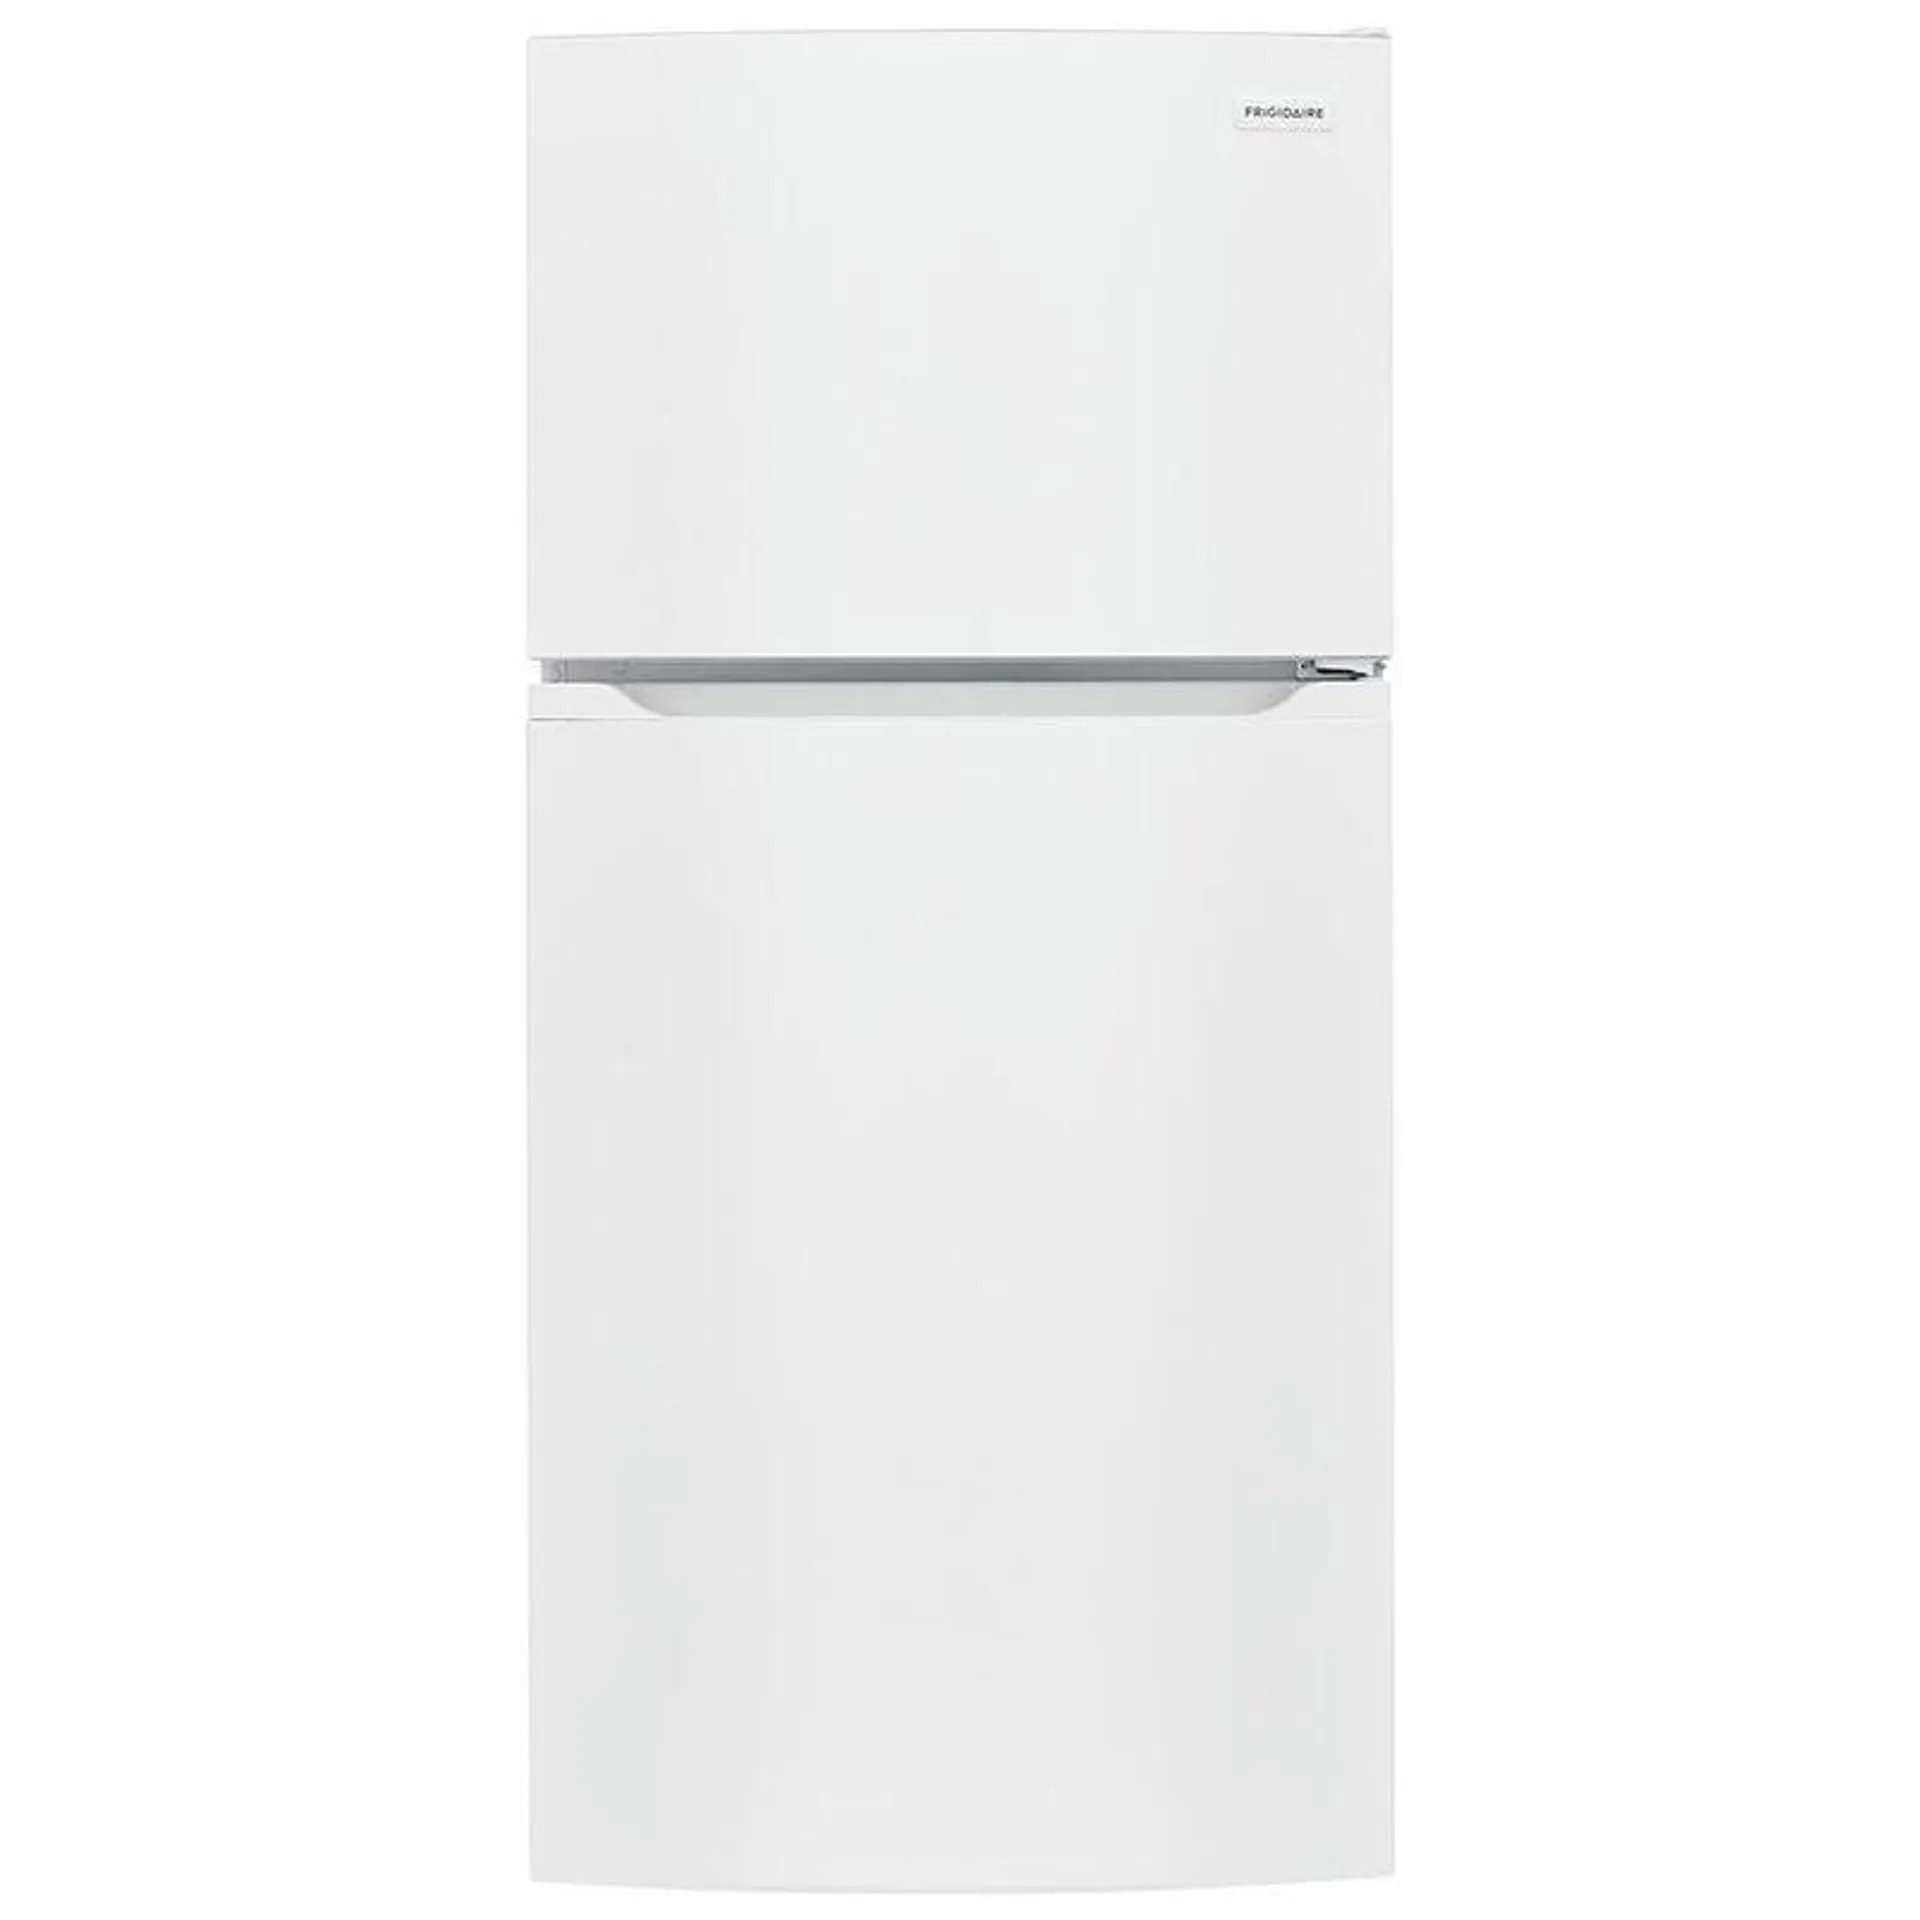 Frigidaire 28 in. 13.9 cu. ft. Counter Depth Top Refrigerator - White